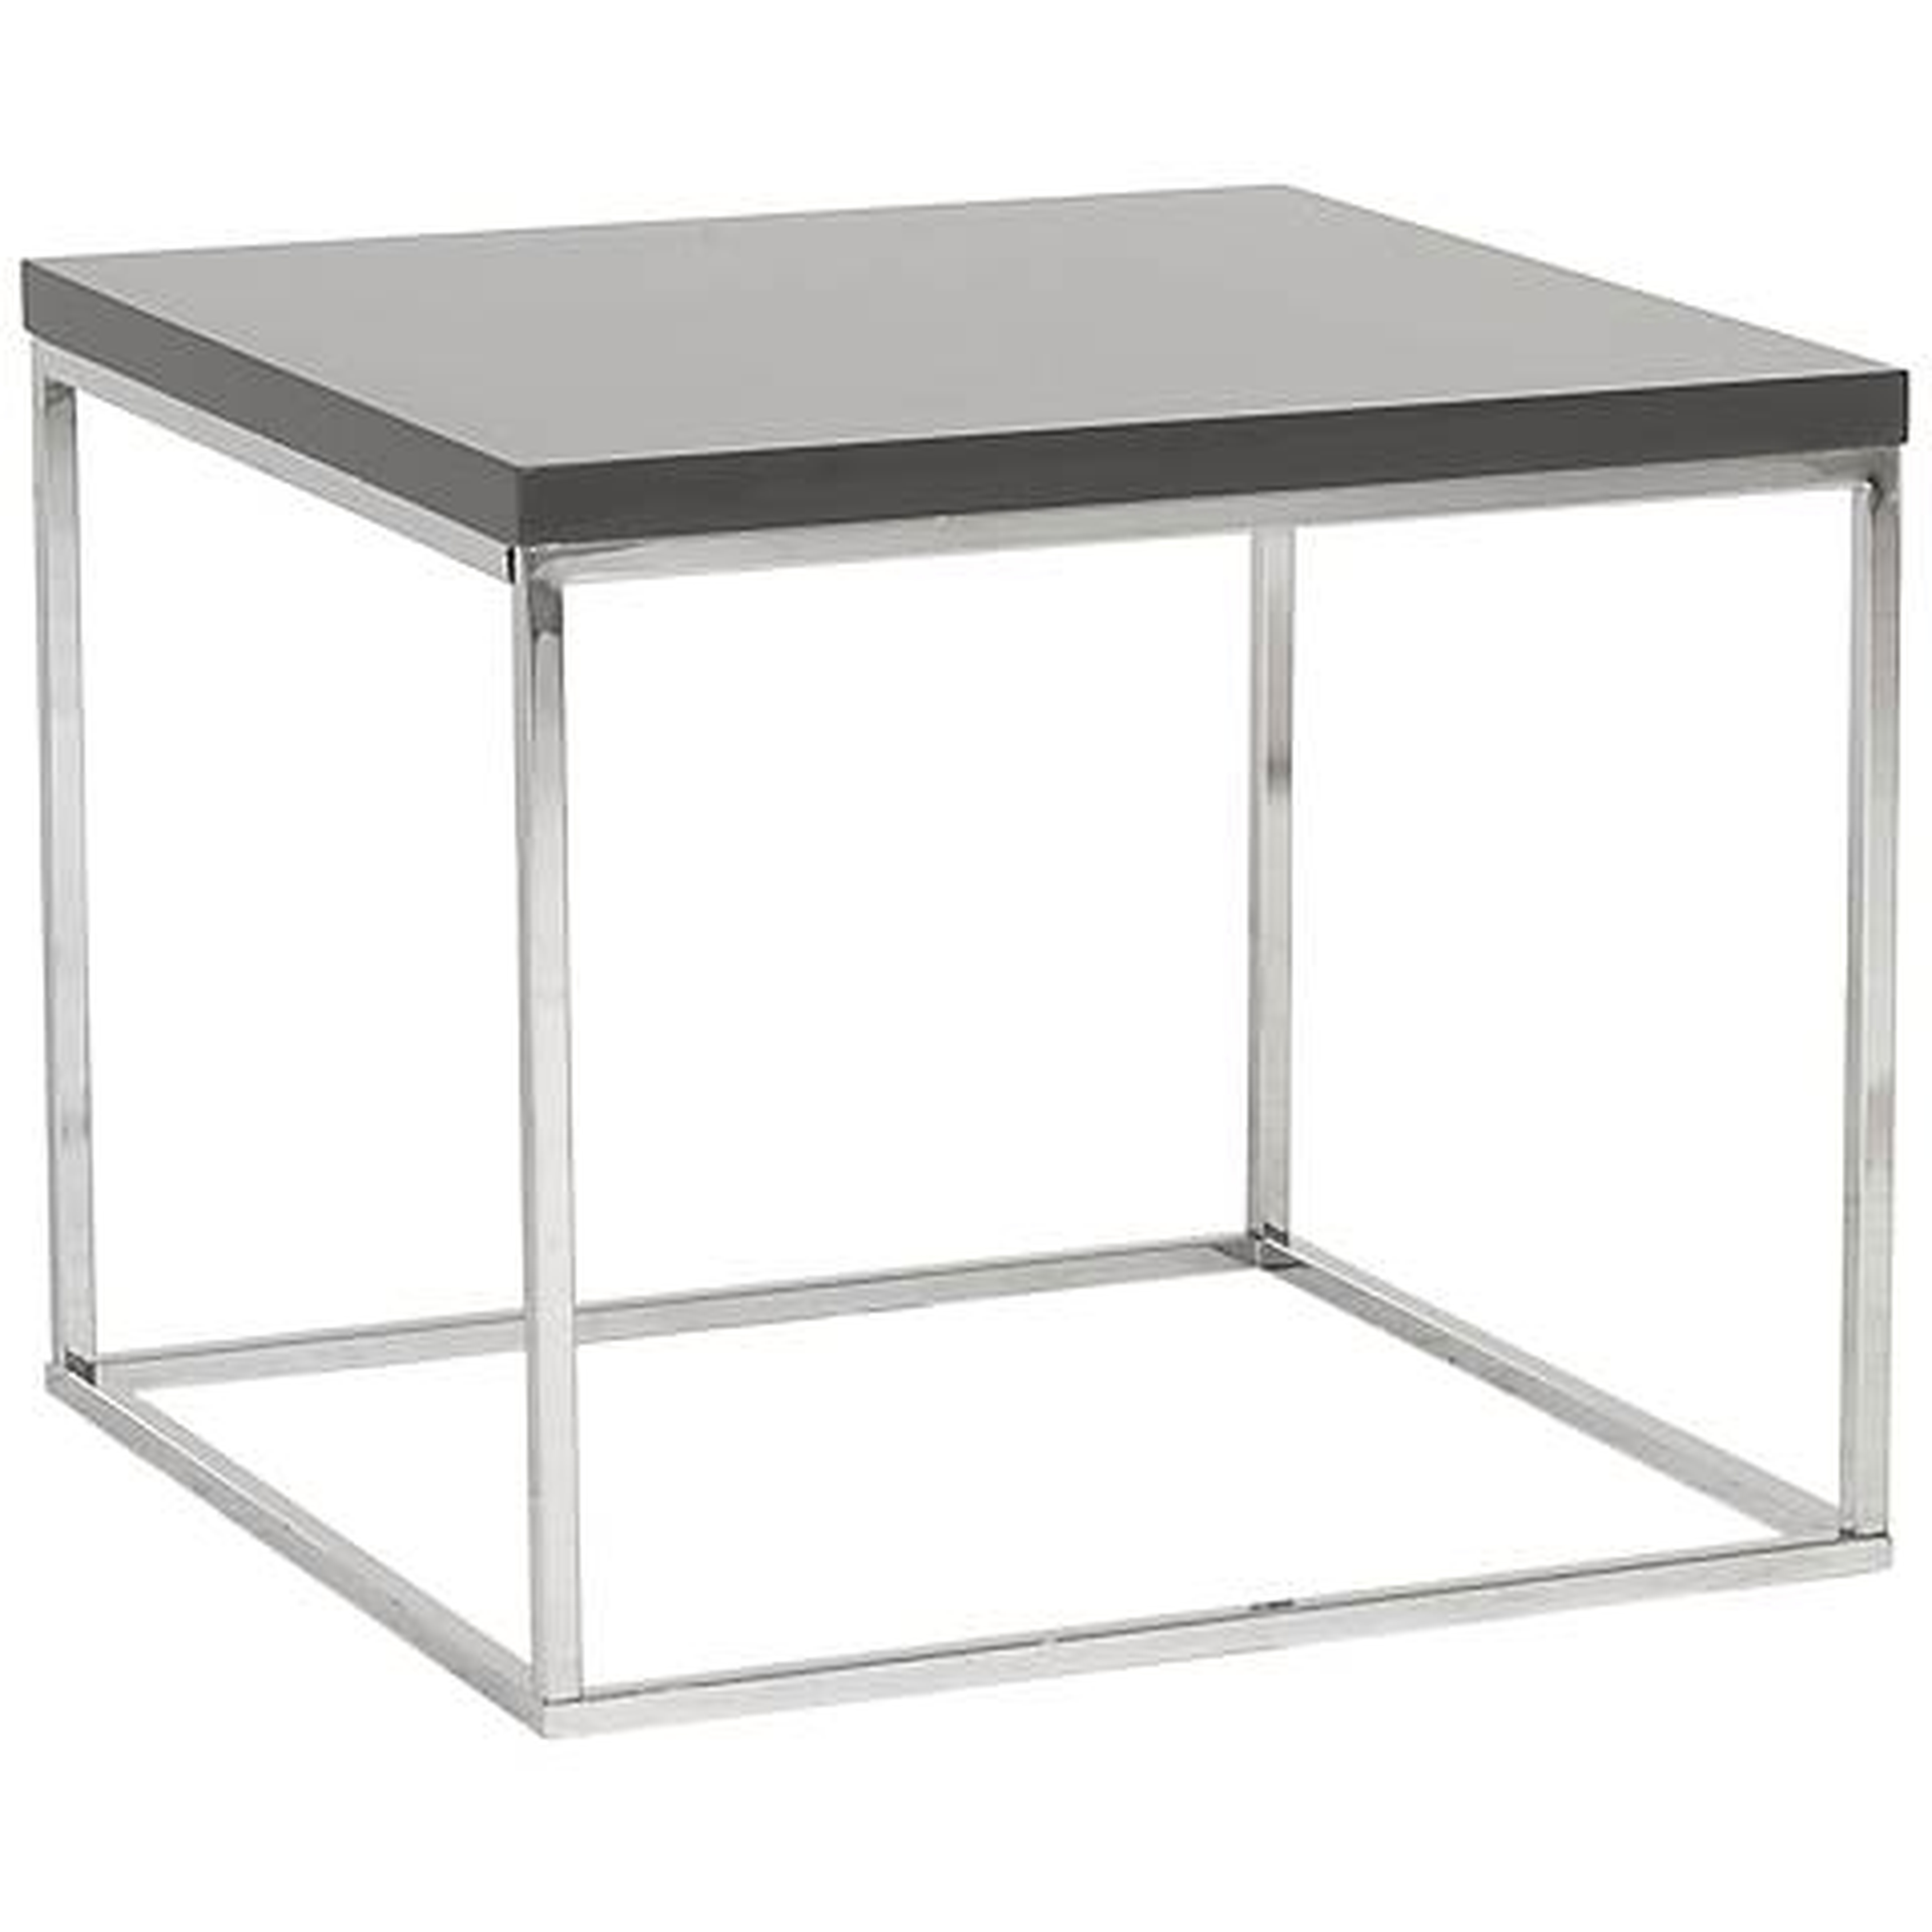 Teresa Square High-Gloss Gray Side Table - Lamps Plus